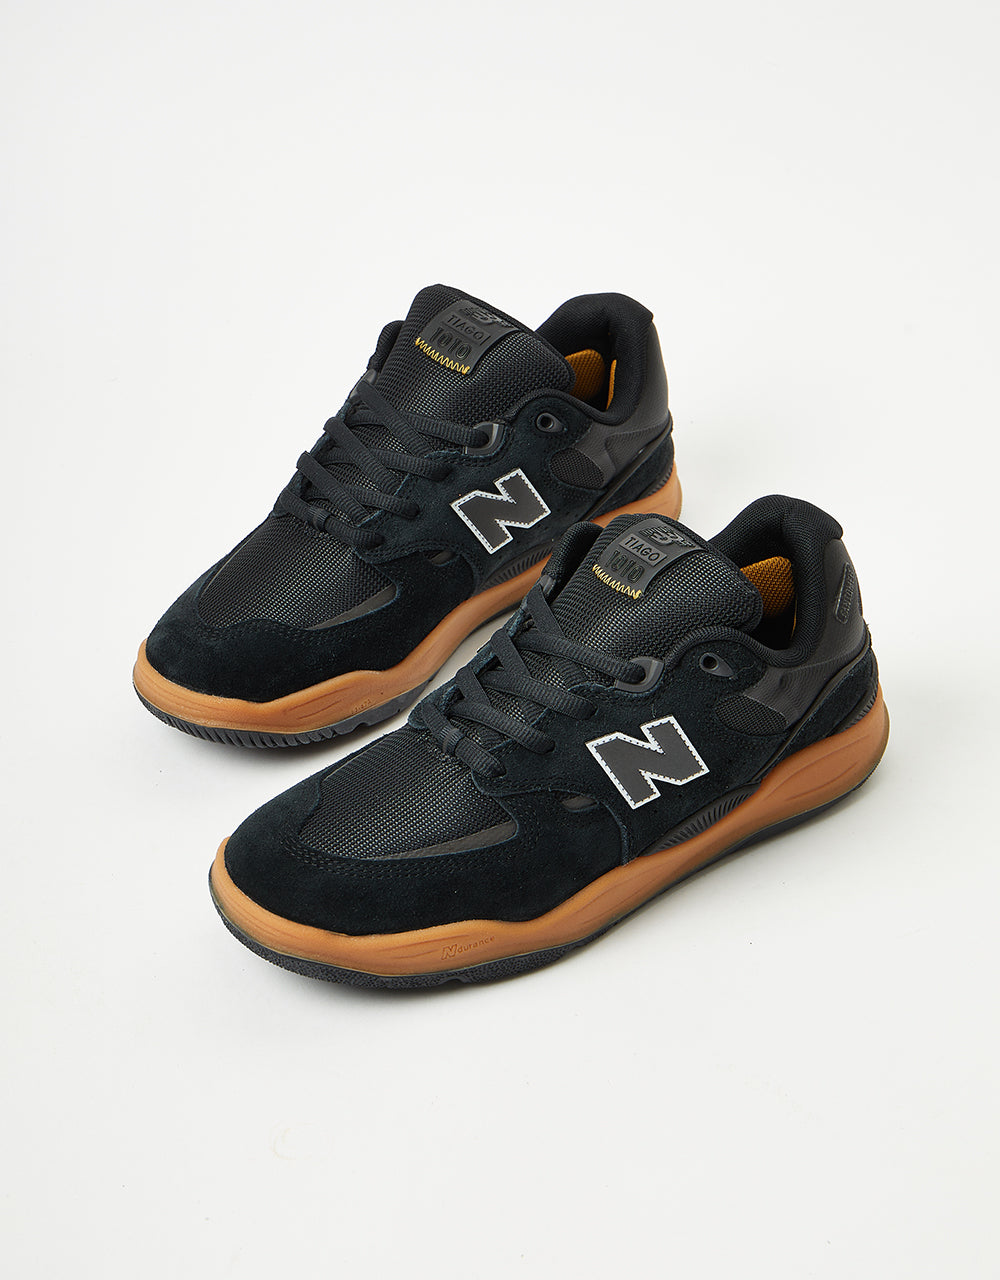 New Balance Numeric 1010 Skate Shoes - Black/Gum